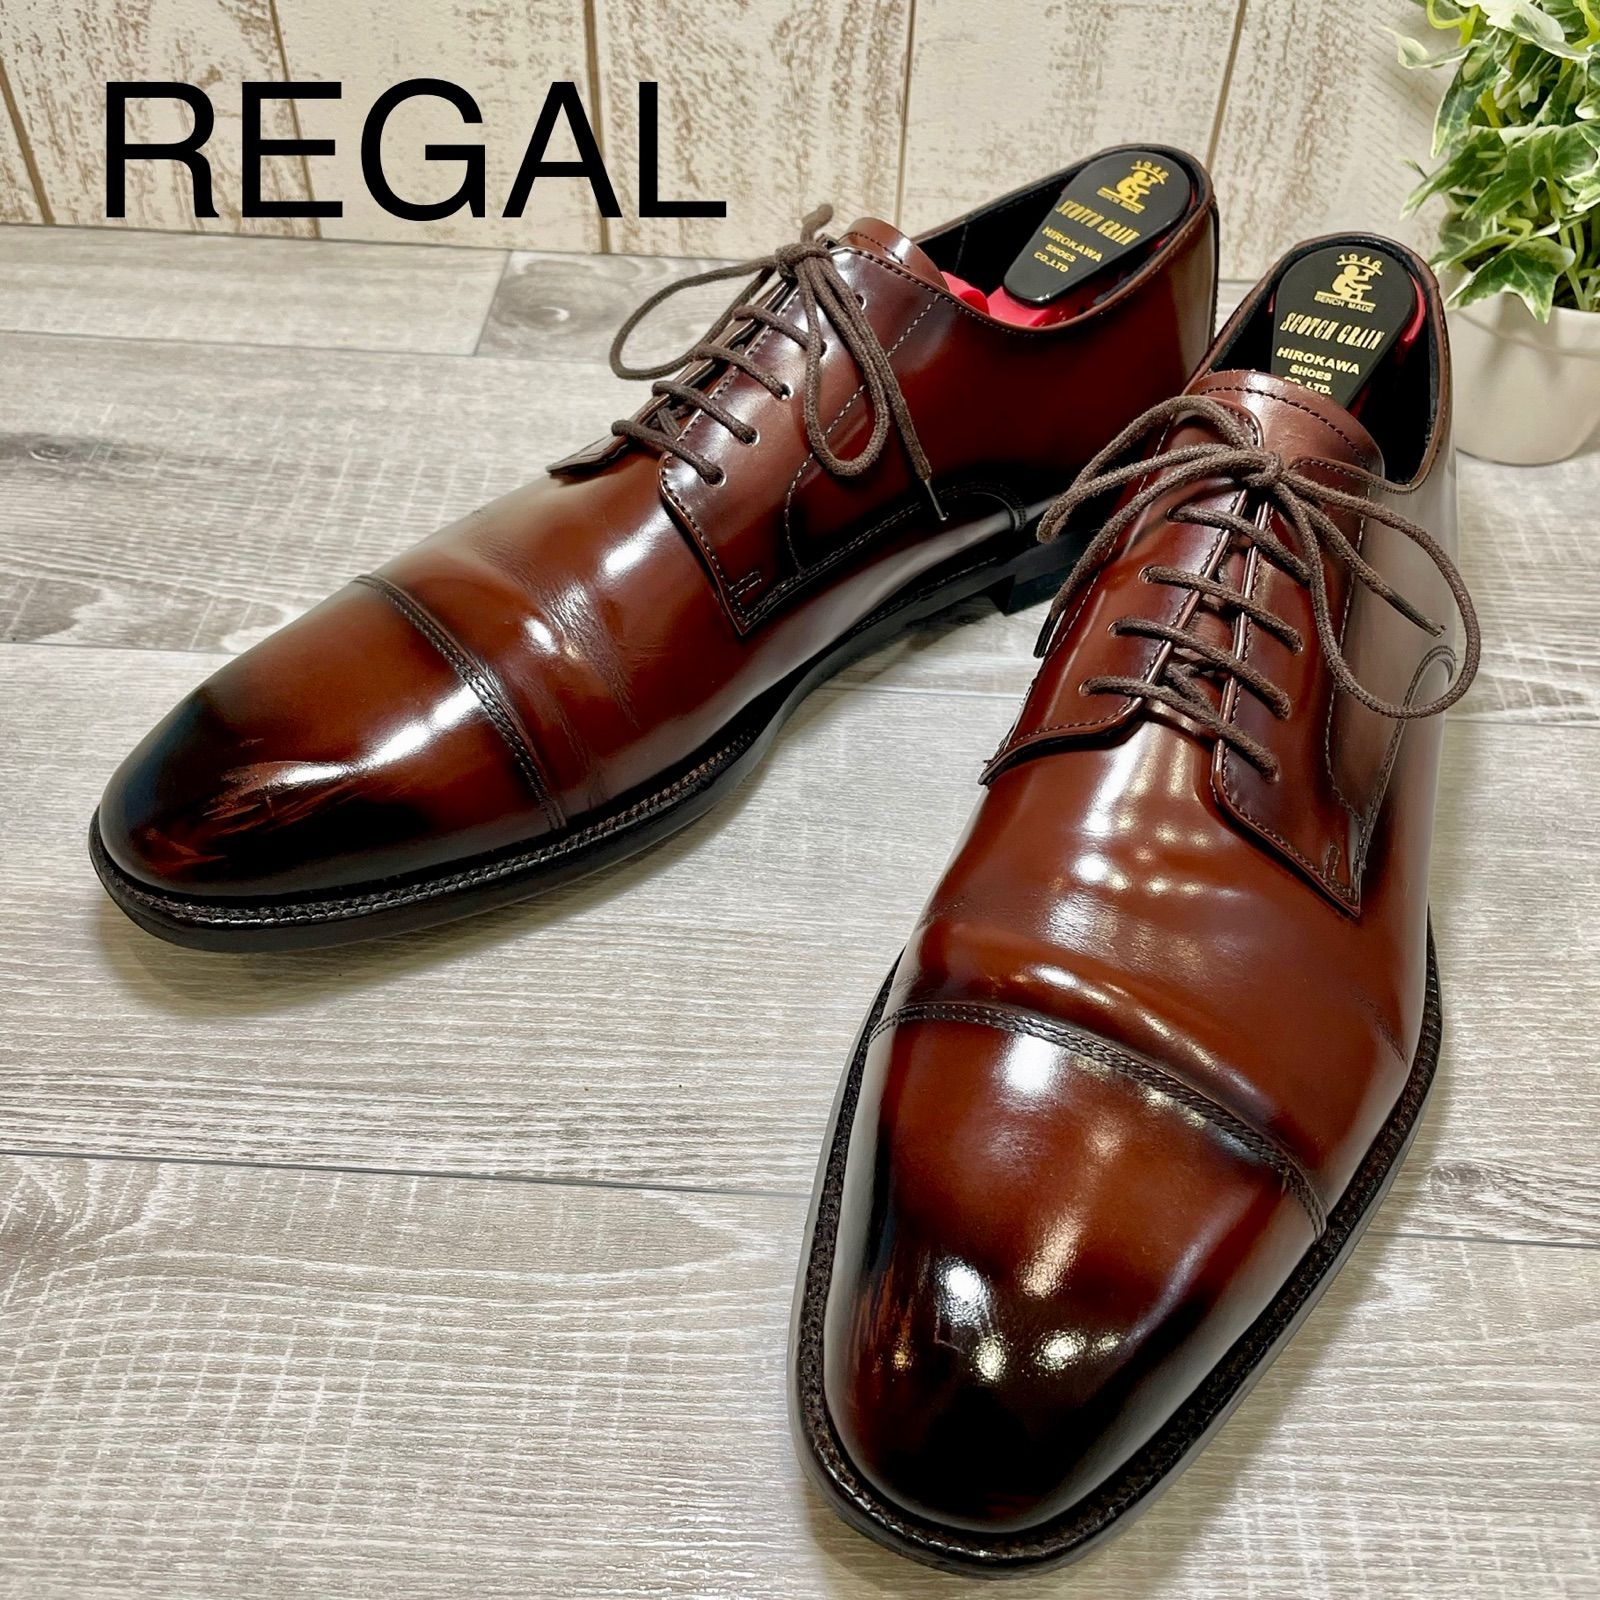 REGAL】リーガル革靴 28cm ストレートチップ 茶 ブラウン - メルカリ